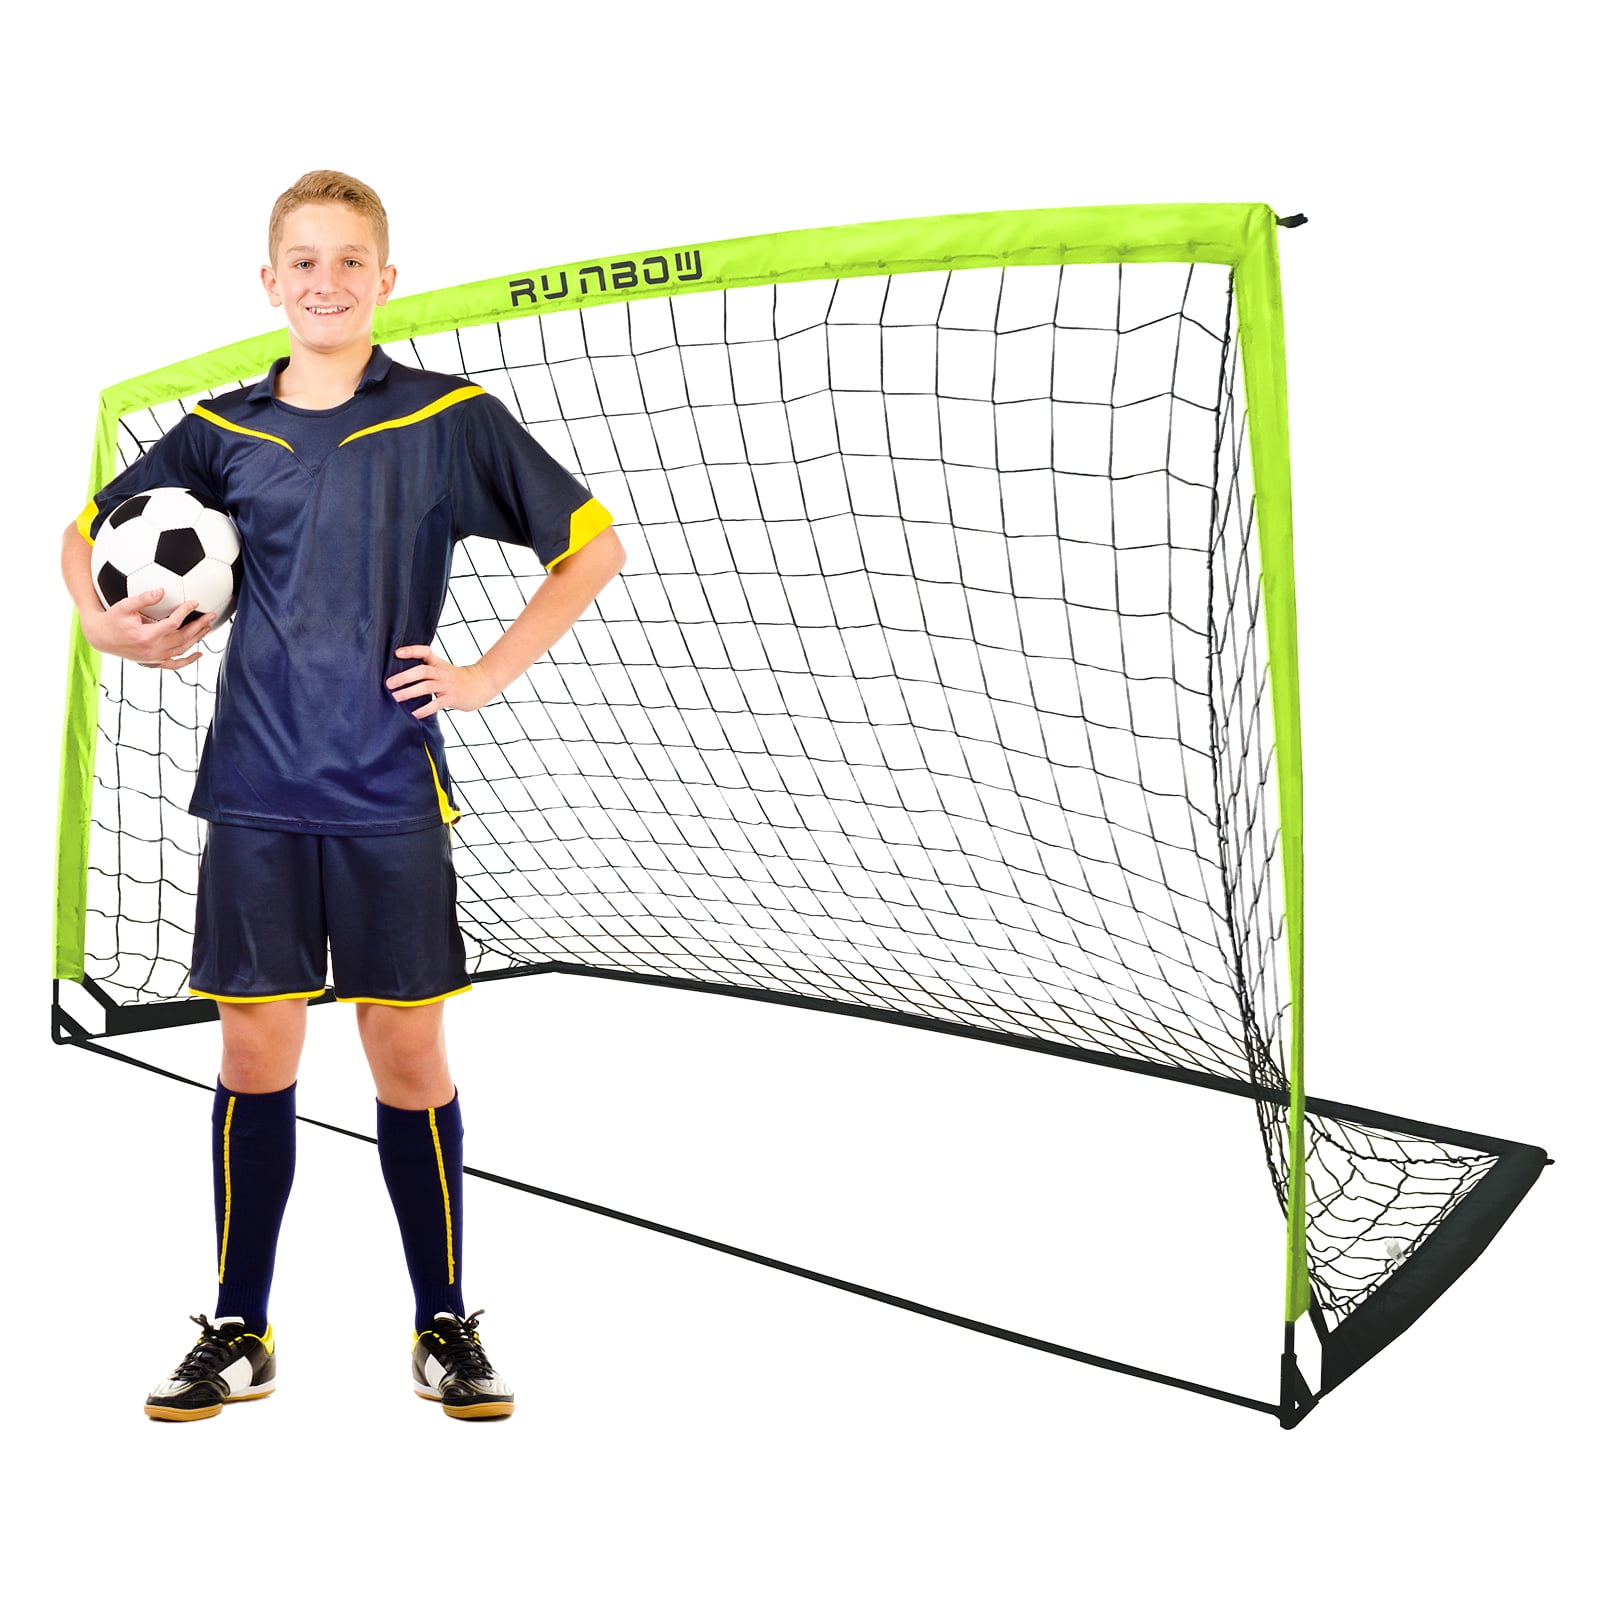 RUNBOW 9x5 ft Portable Kids Soccer Goal for Backyard Goals Adult